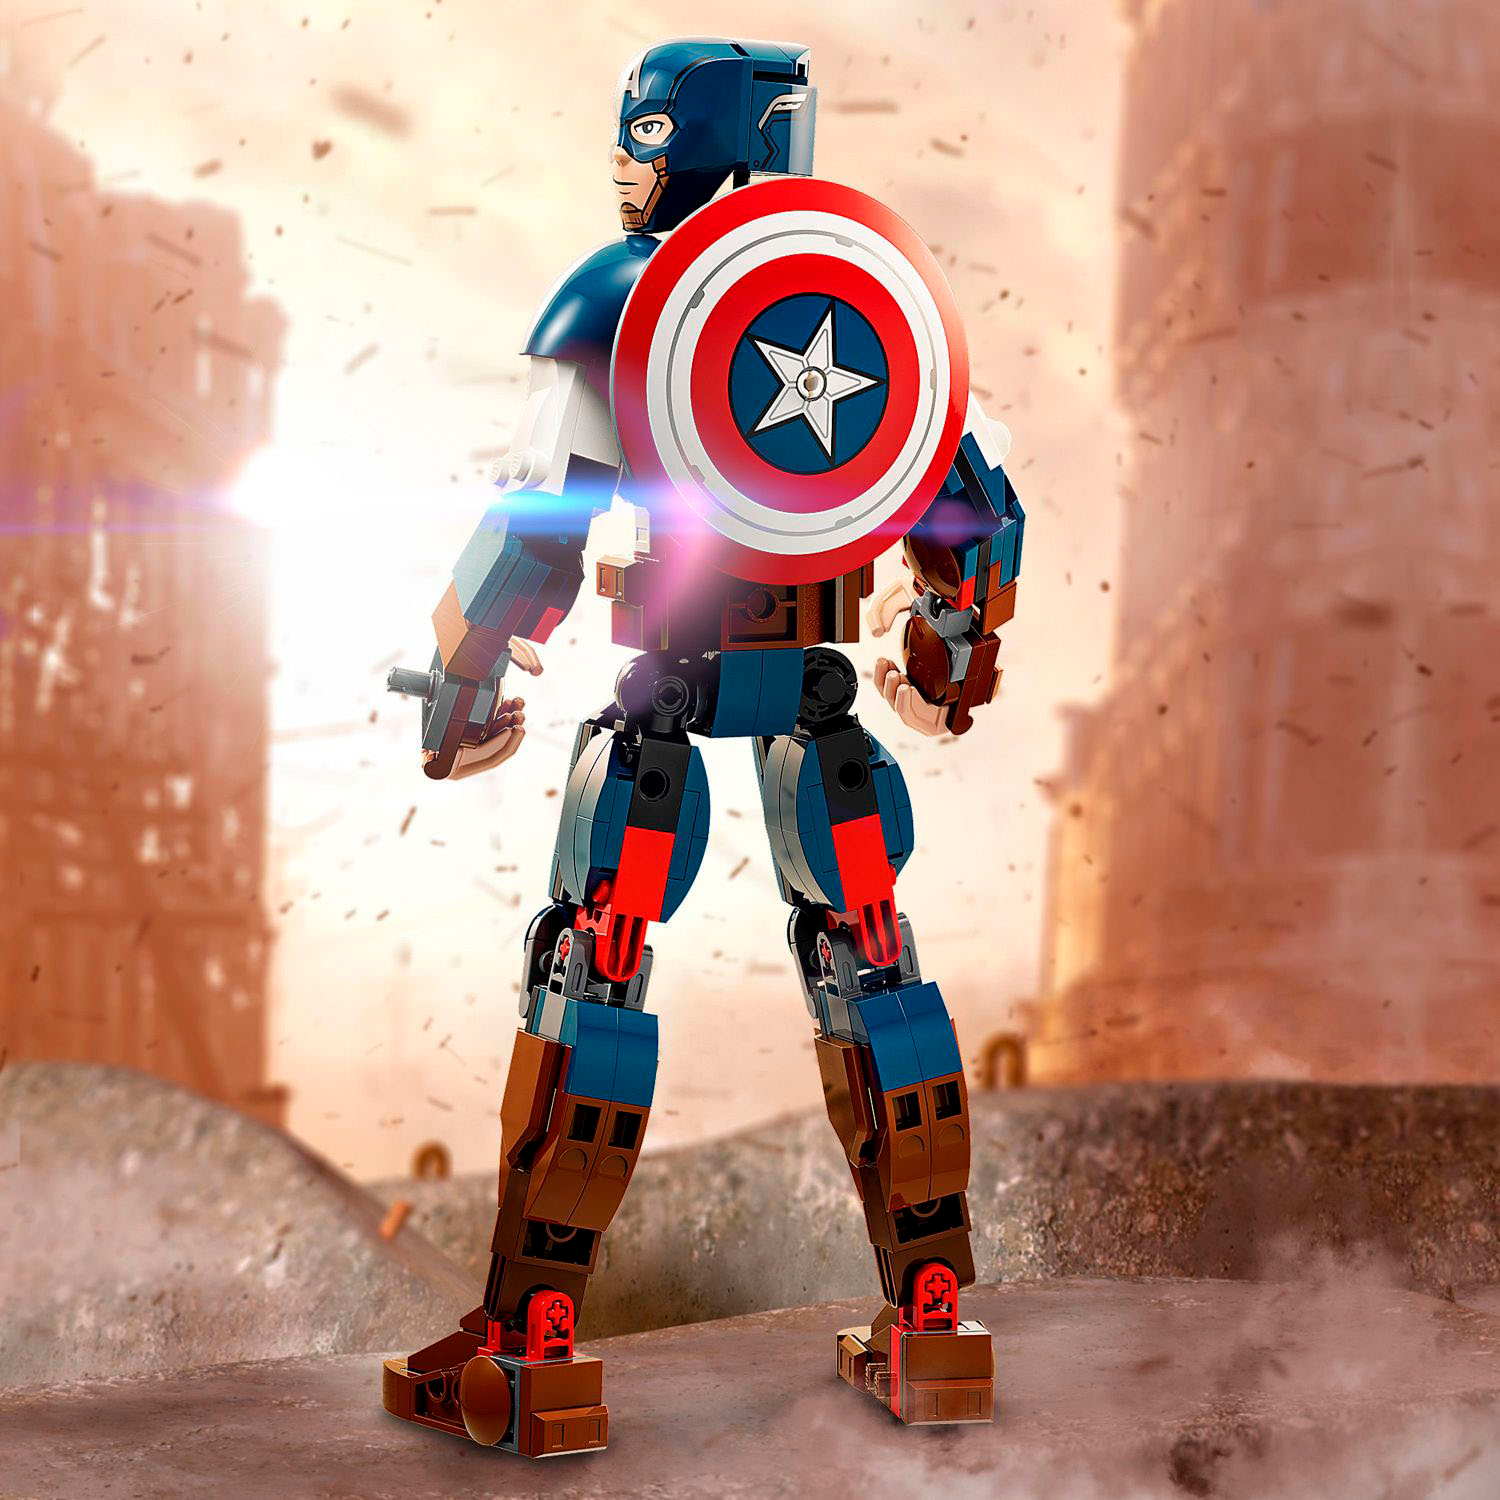 LEGO Marvel Captain America Construction Figure 76258 6427746